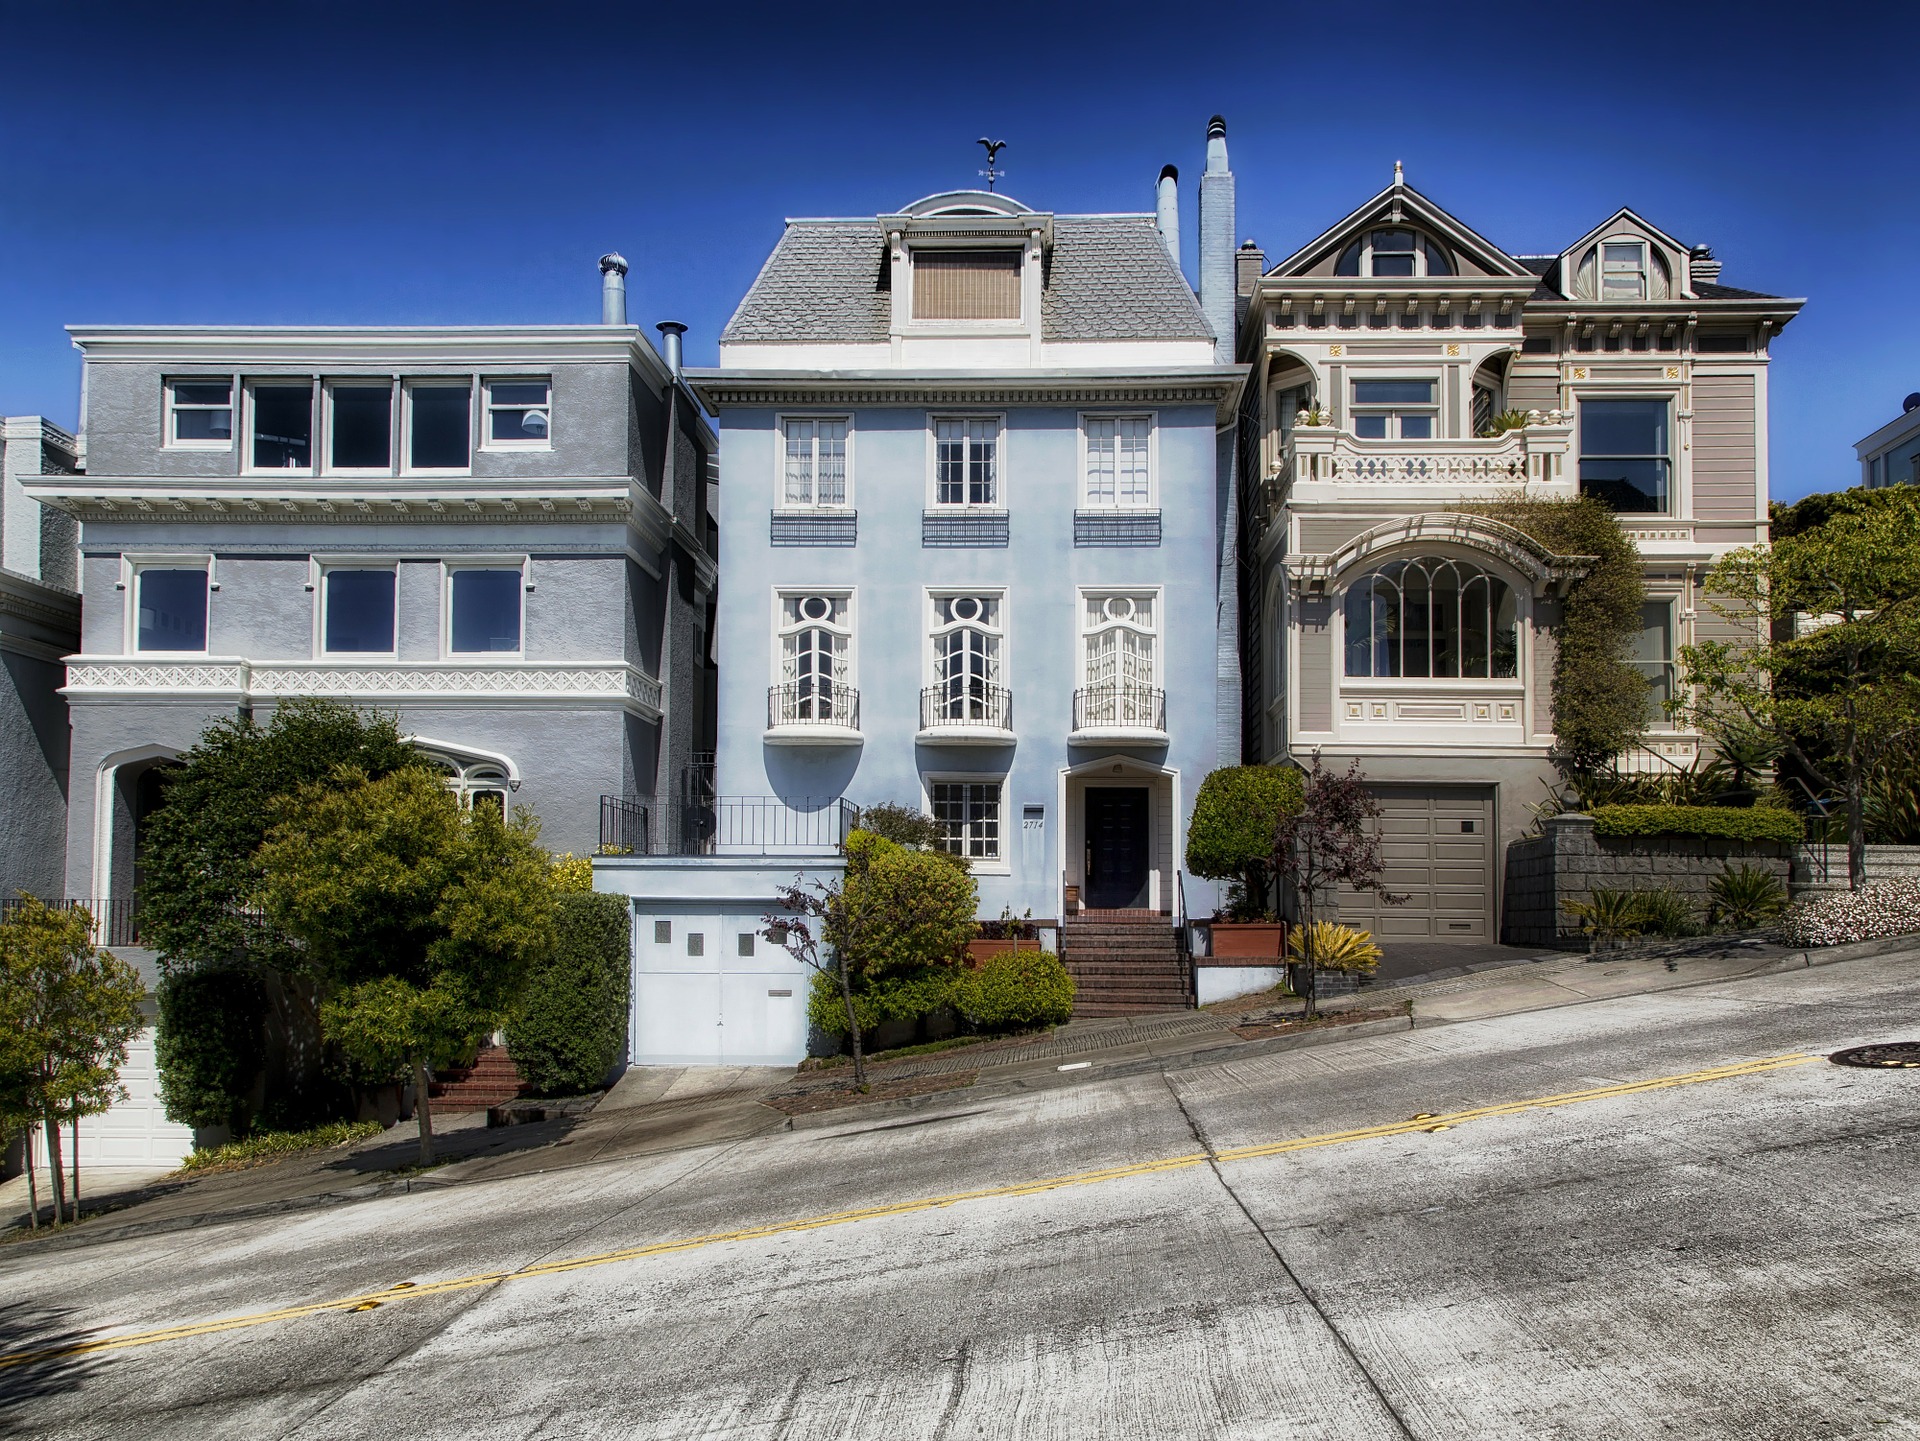 San Francisco row houses on a downhill street